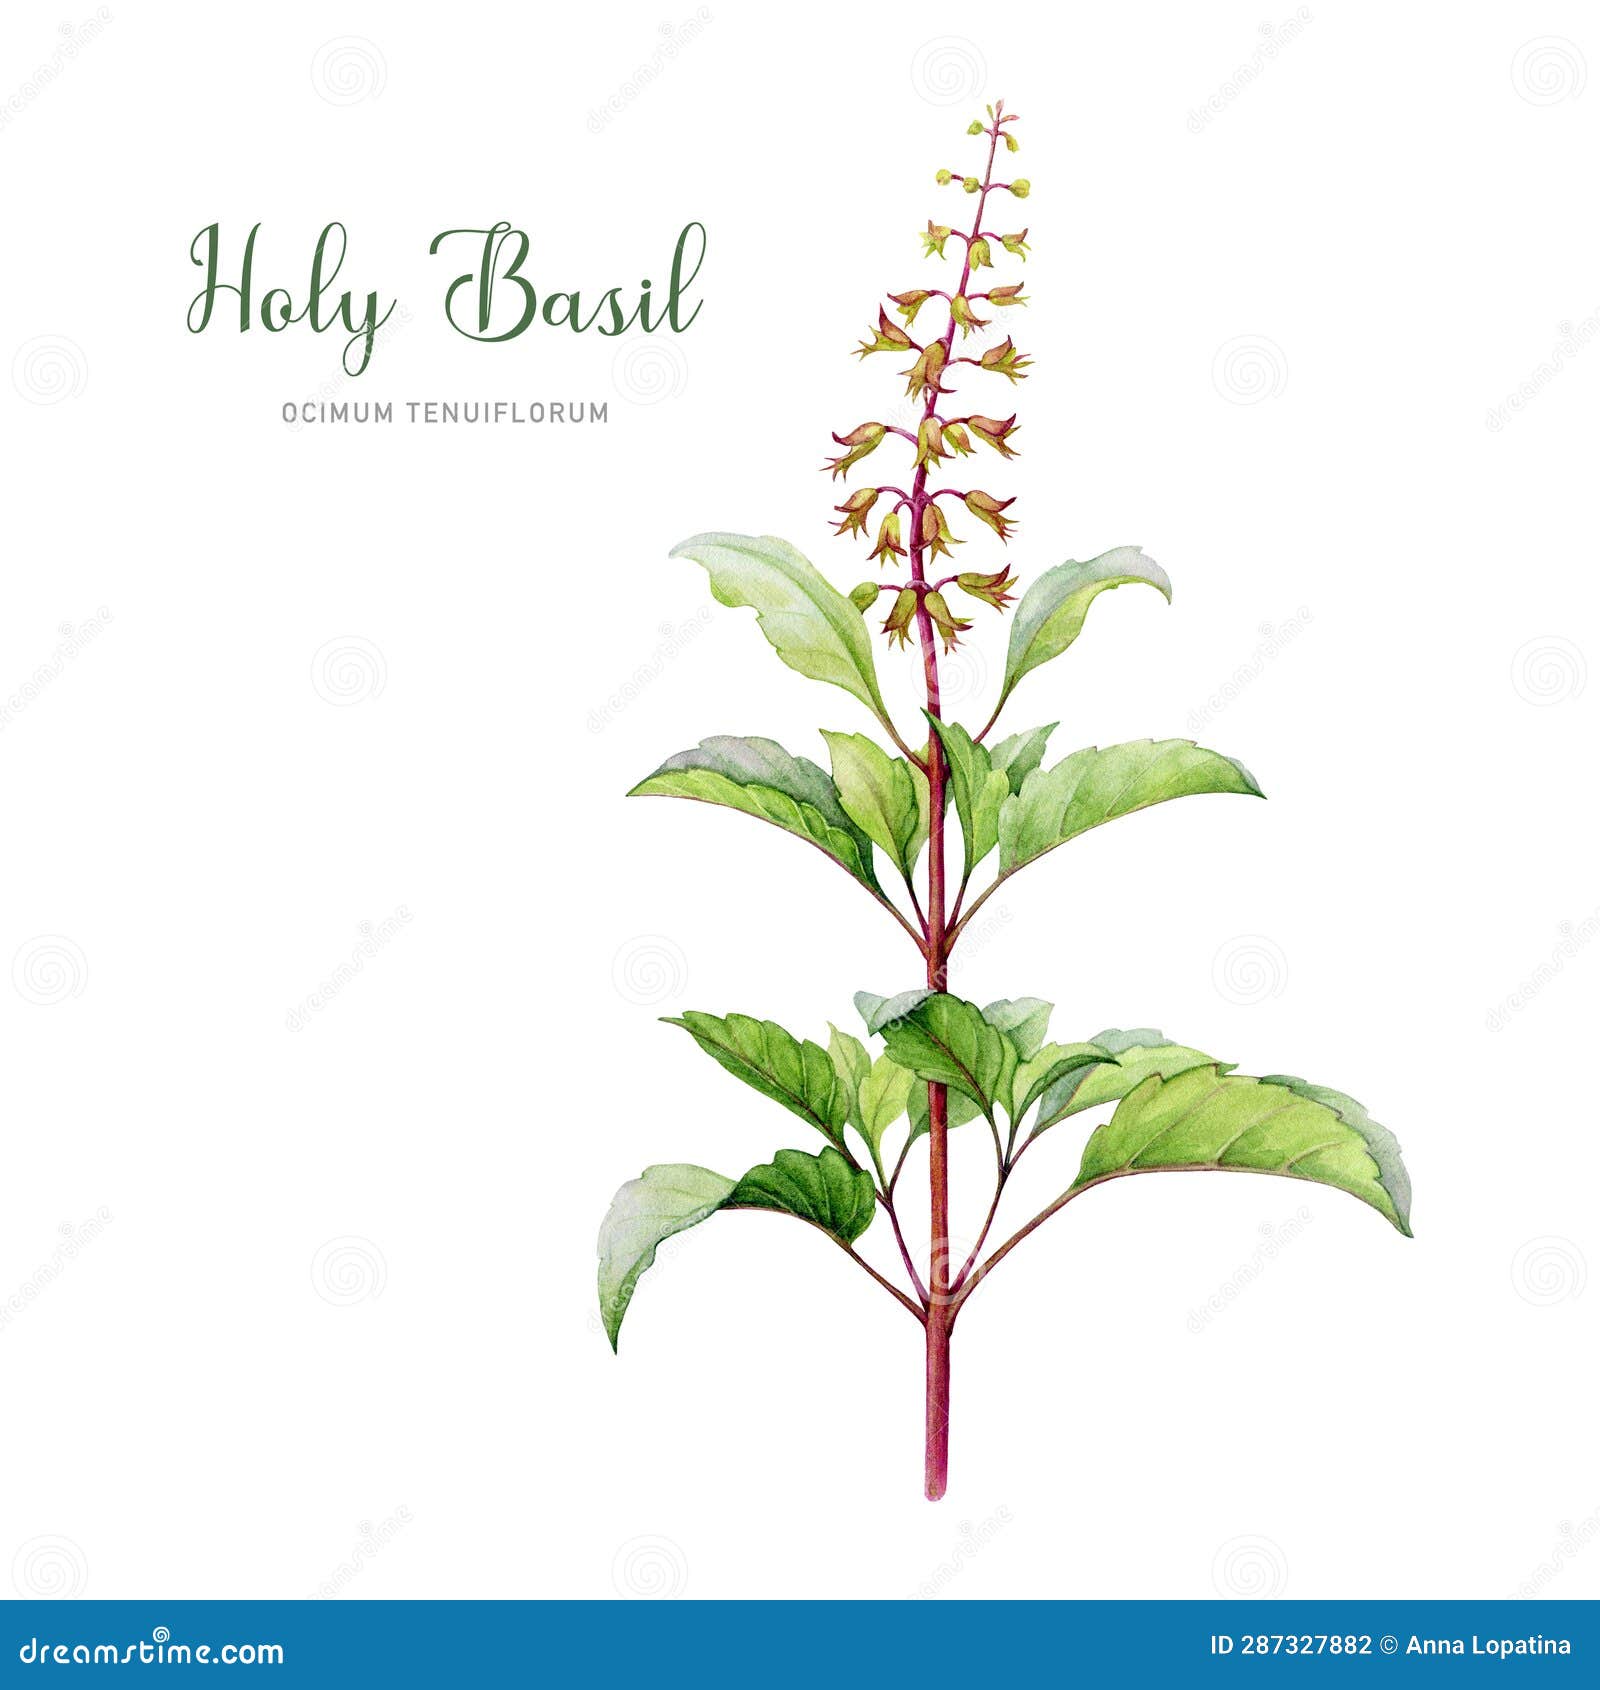 Tulsi flowers harvester for herbalist Sandra. #customtattoo  #botanicaltattoo #tattoo #illustration #drawing #finelinetattoo  #abstractta... | Instagram